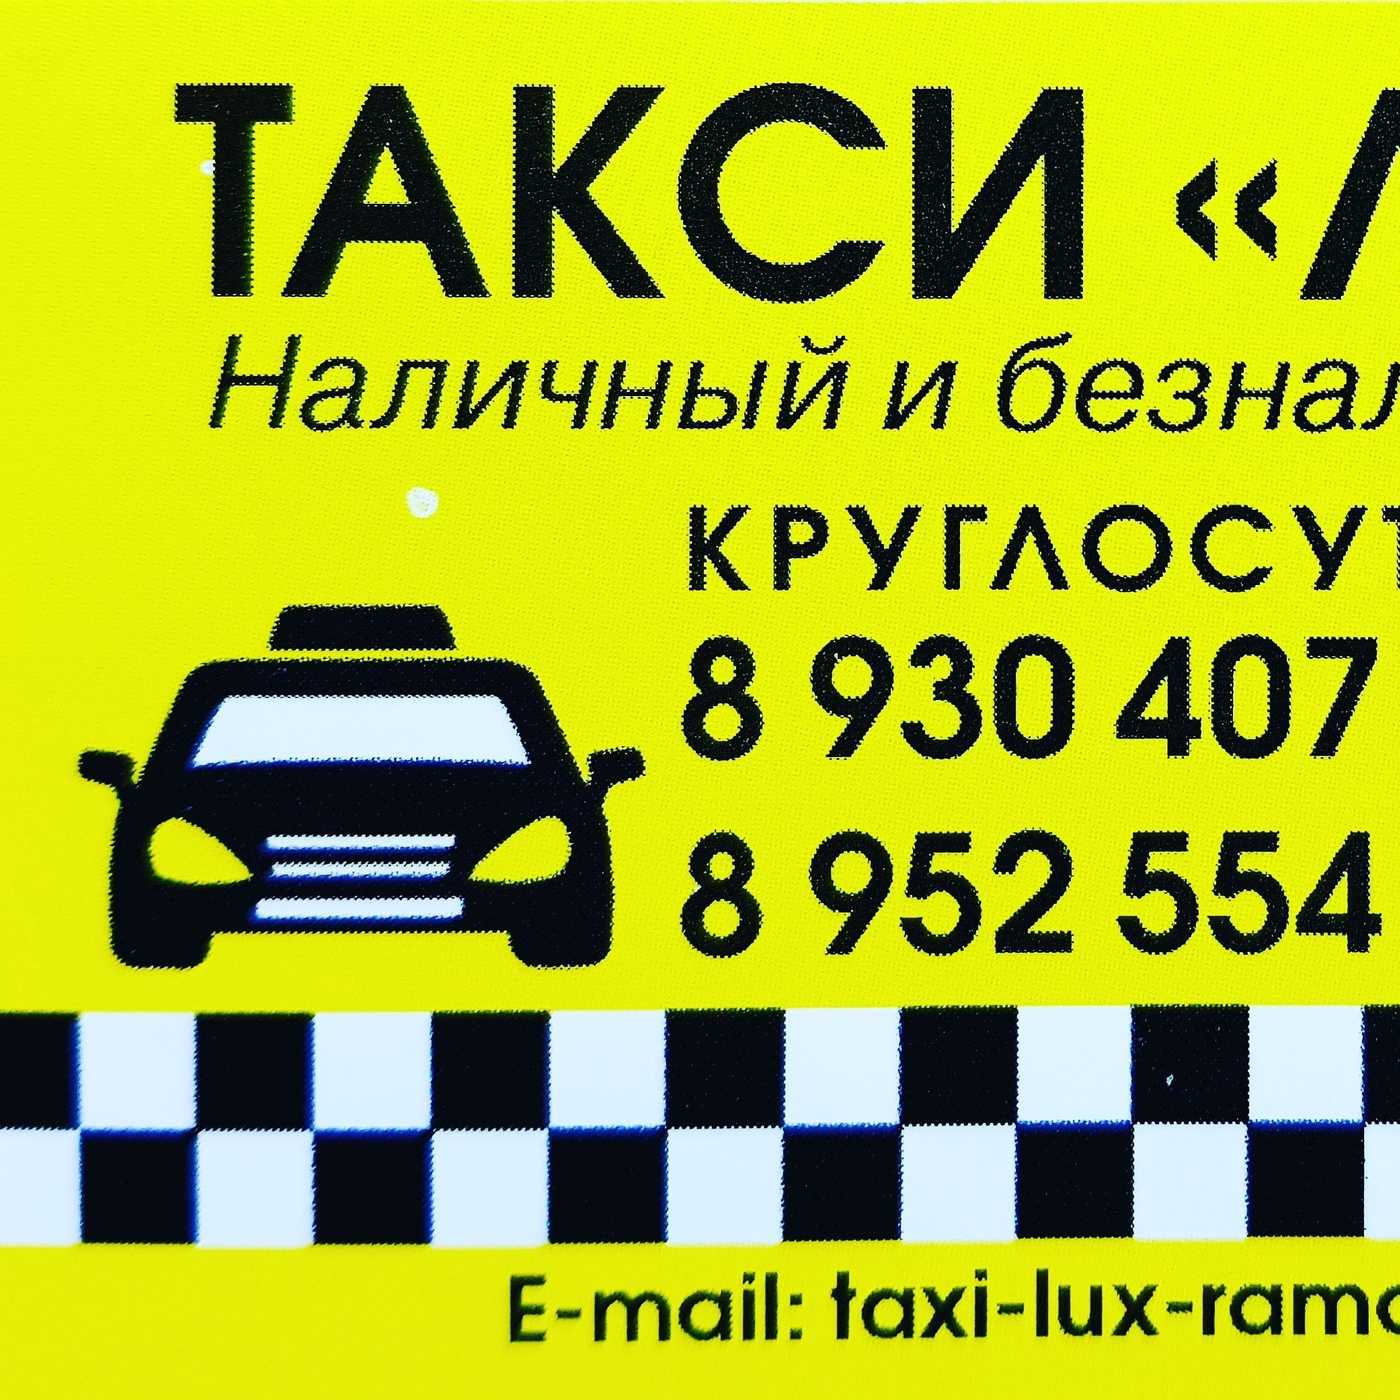 Номер телефона такси полевской. Такси Люкс. Номер такси. Номера таксистов. Такси Люкс номер телефона.